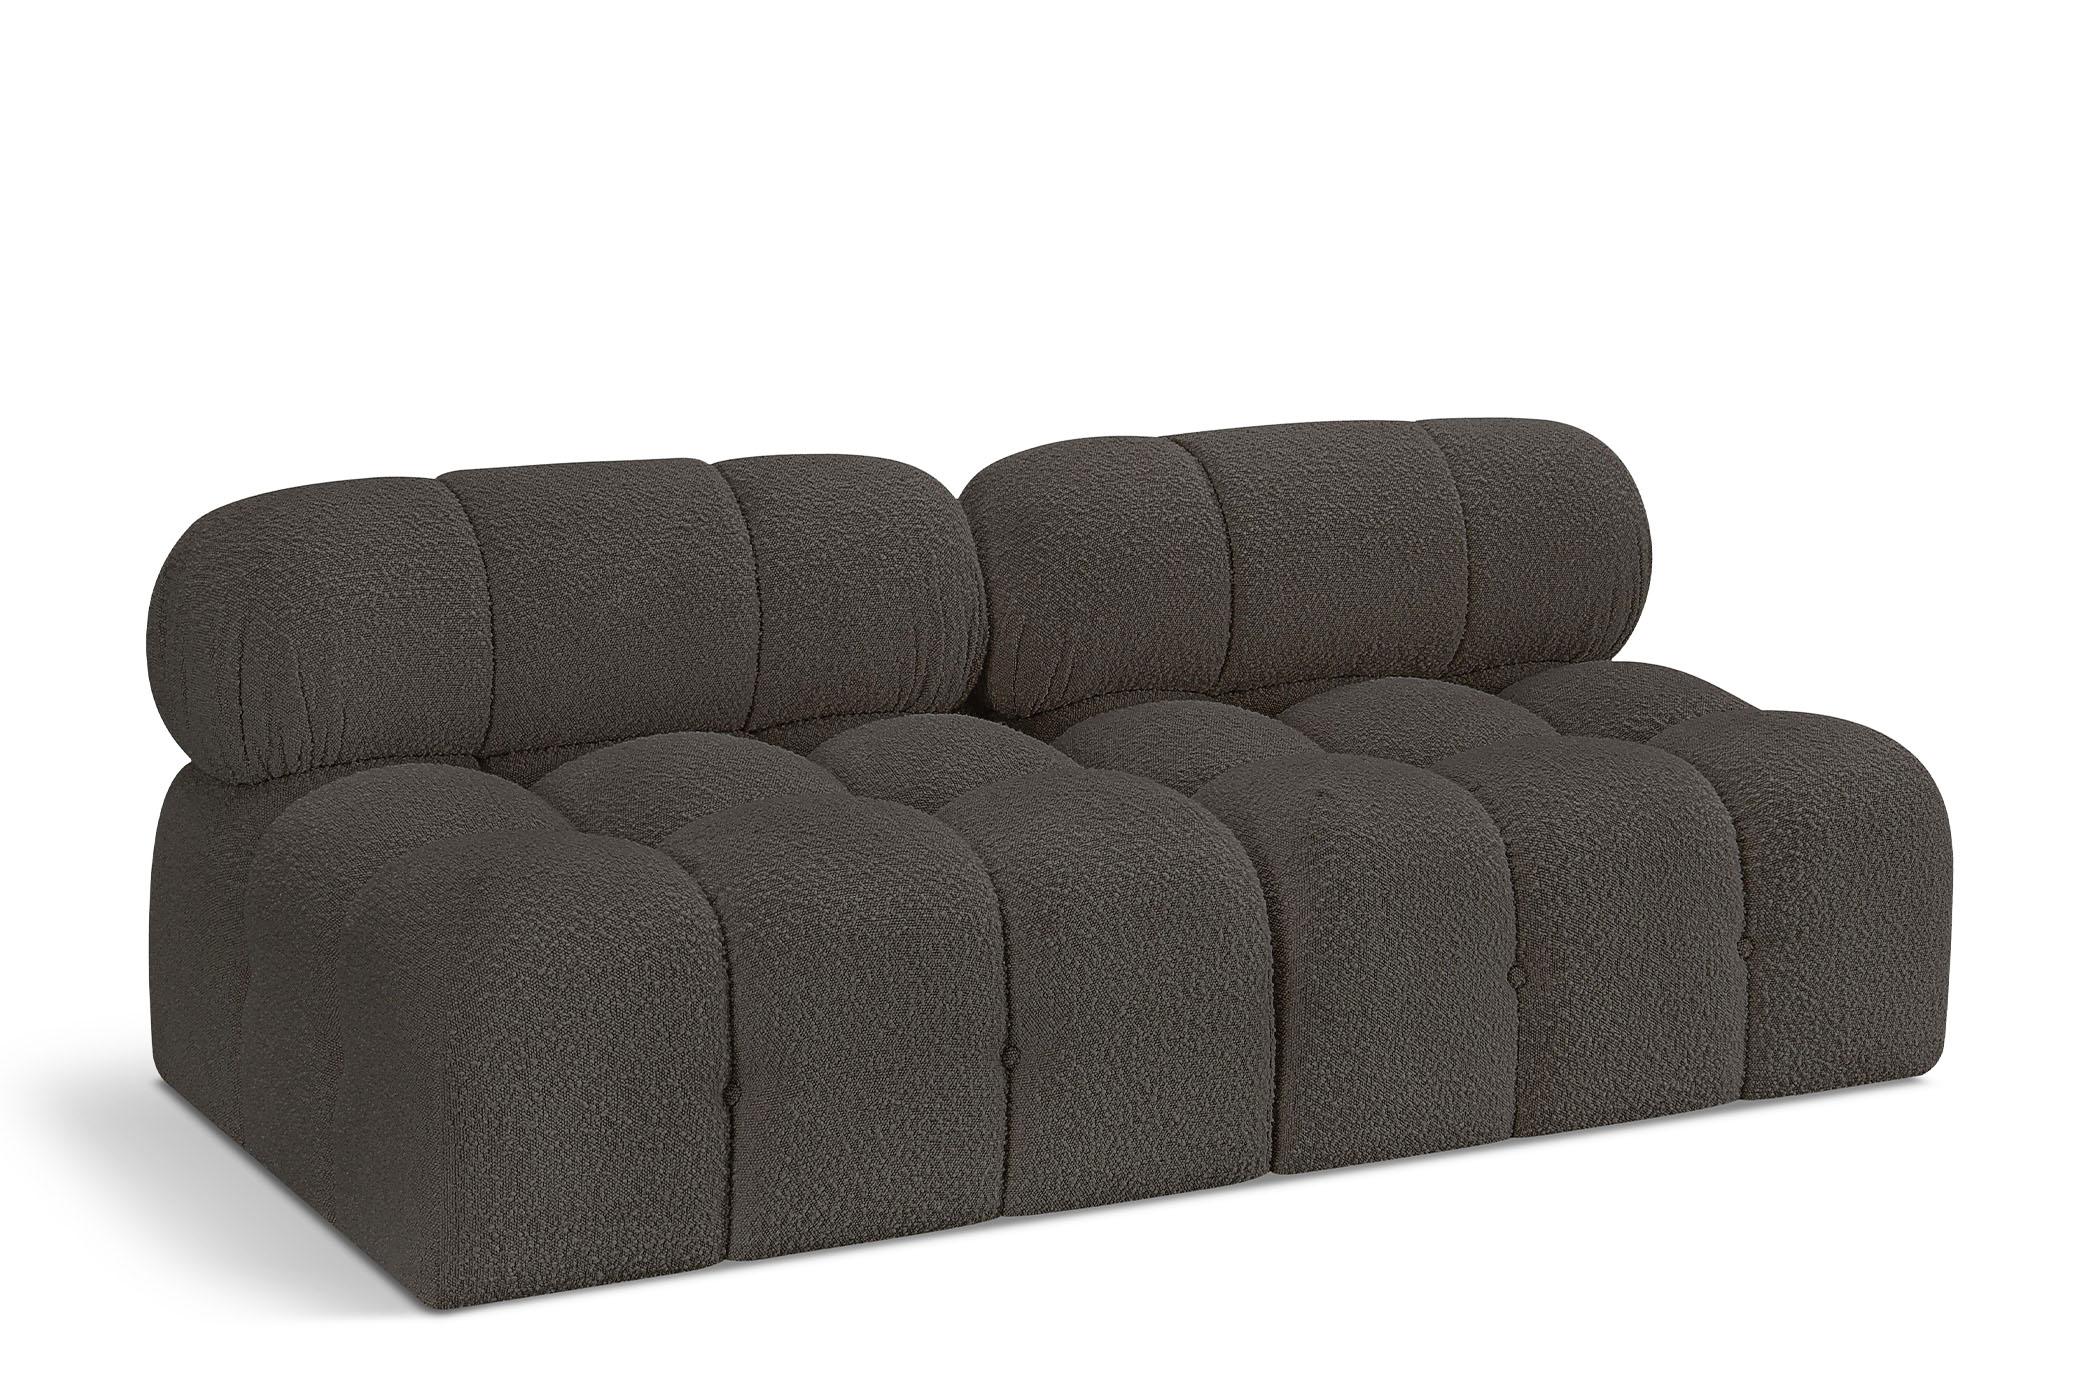 Contemporary, Modern Modular Sofa AMES 611Brown-S68B 611Brown-S68B in Brown 